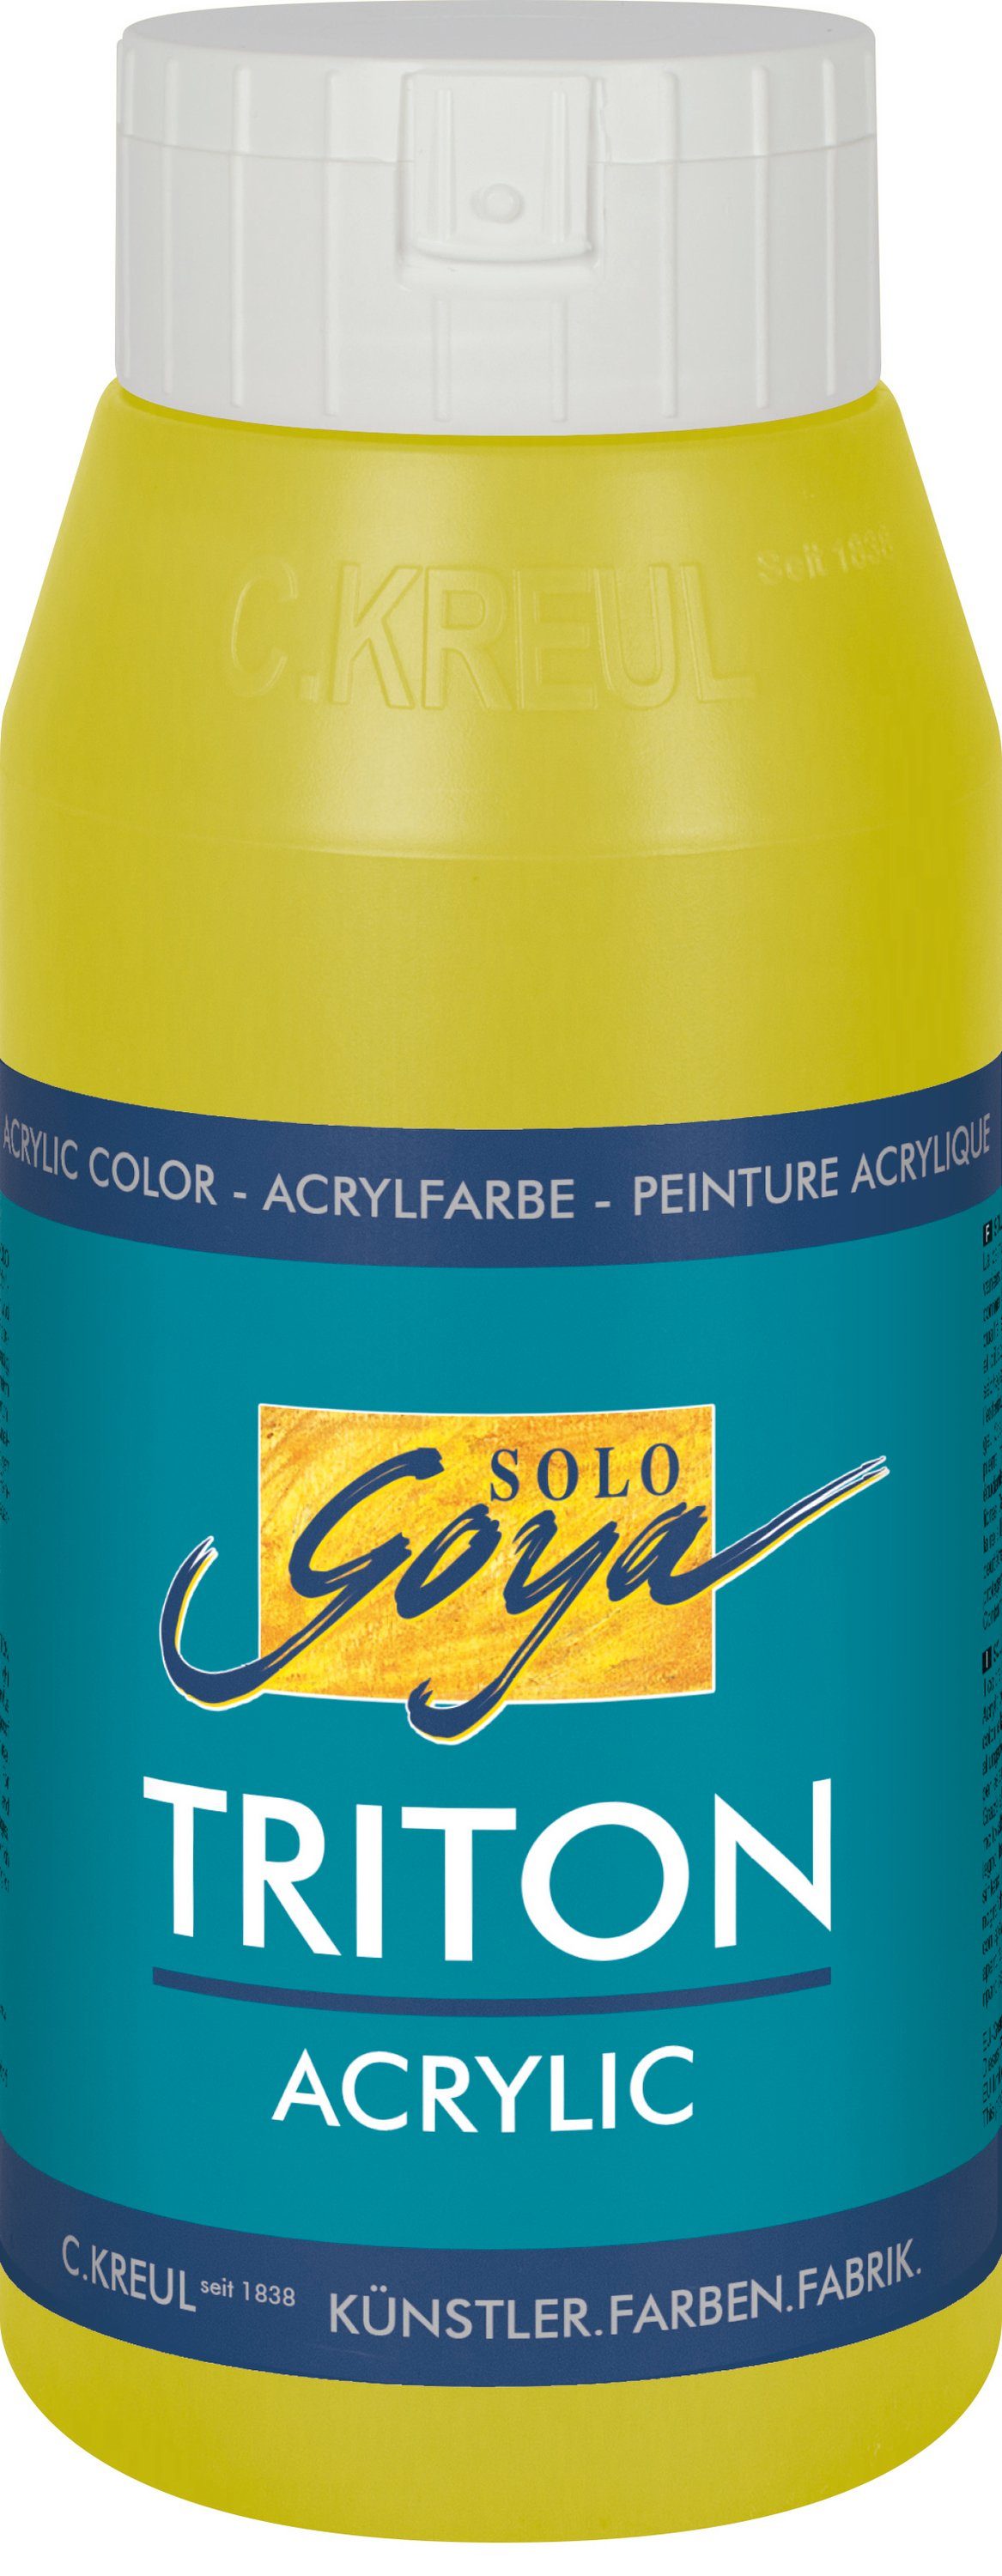 Kreul Olivgrün Goya 750 hell Acrylic, Solo ml Acrylfarbe Triton